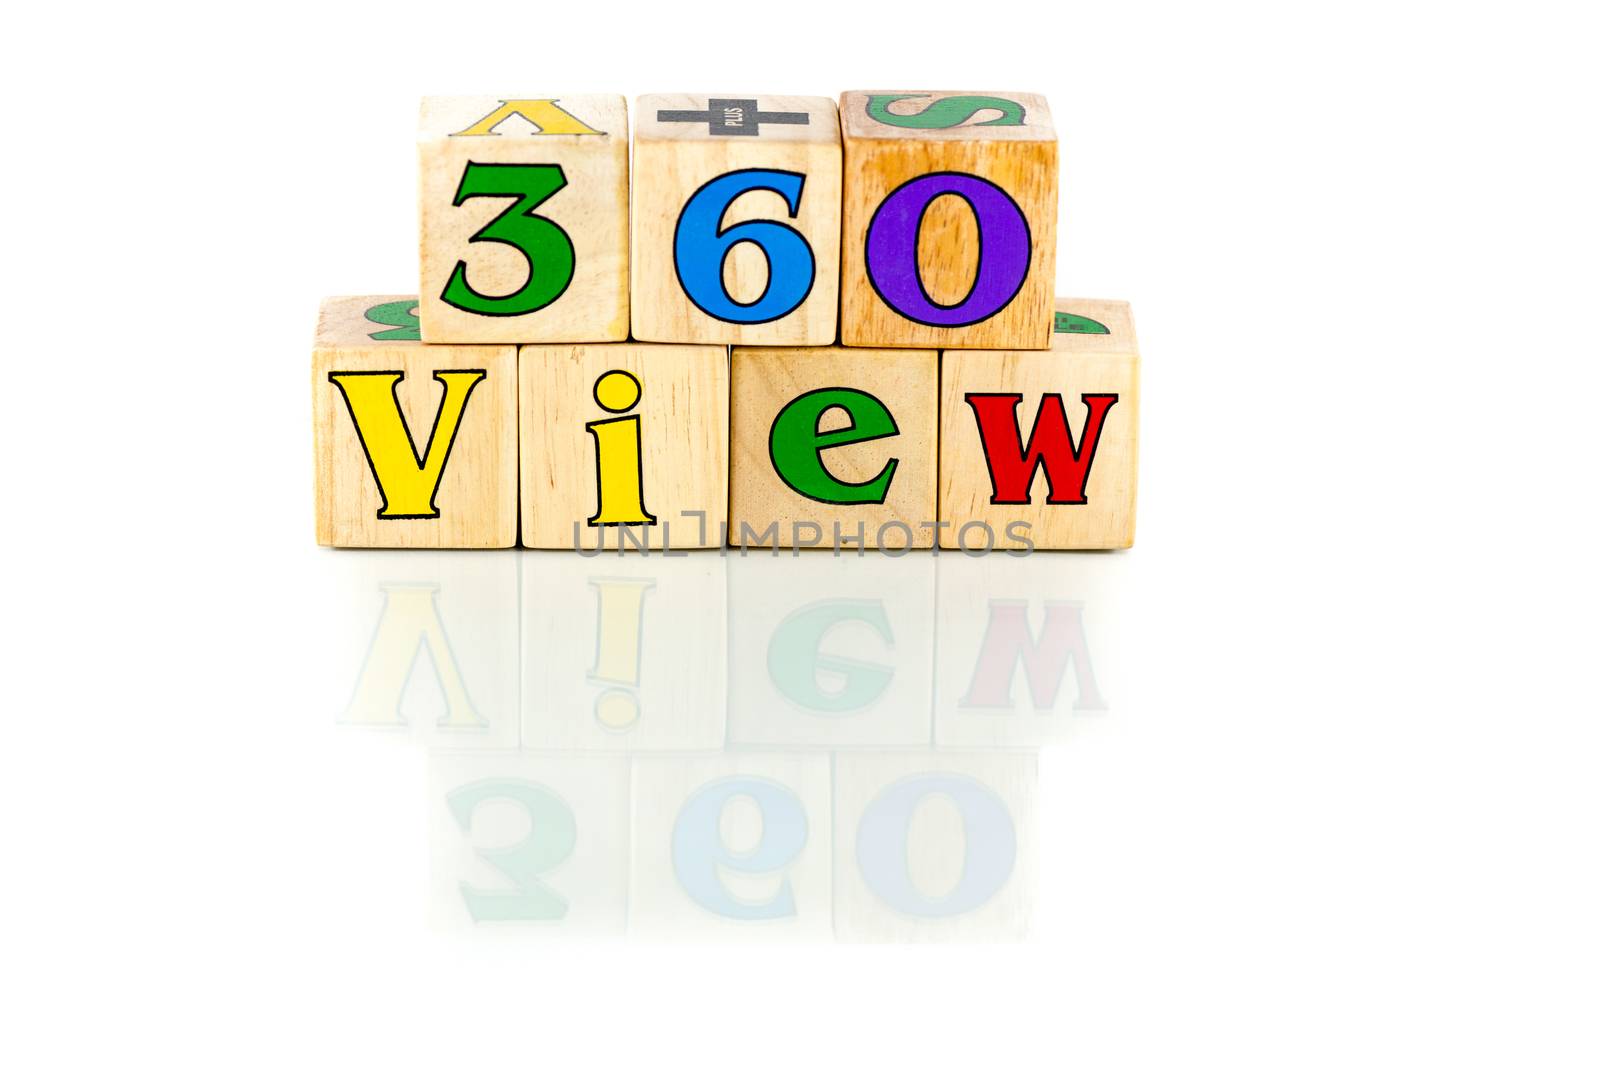 360 view by sohel.parvez@hotmail.com